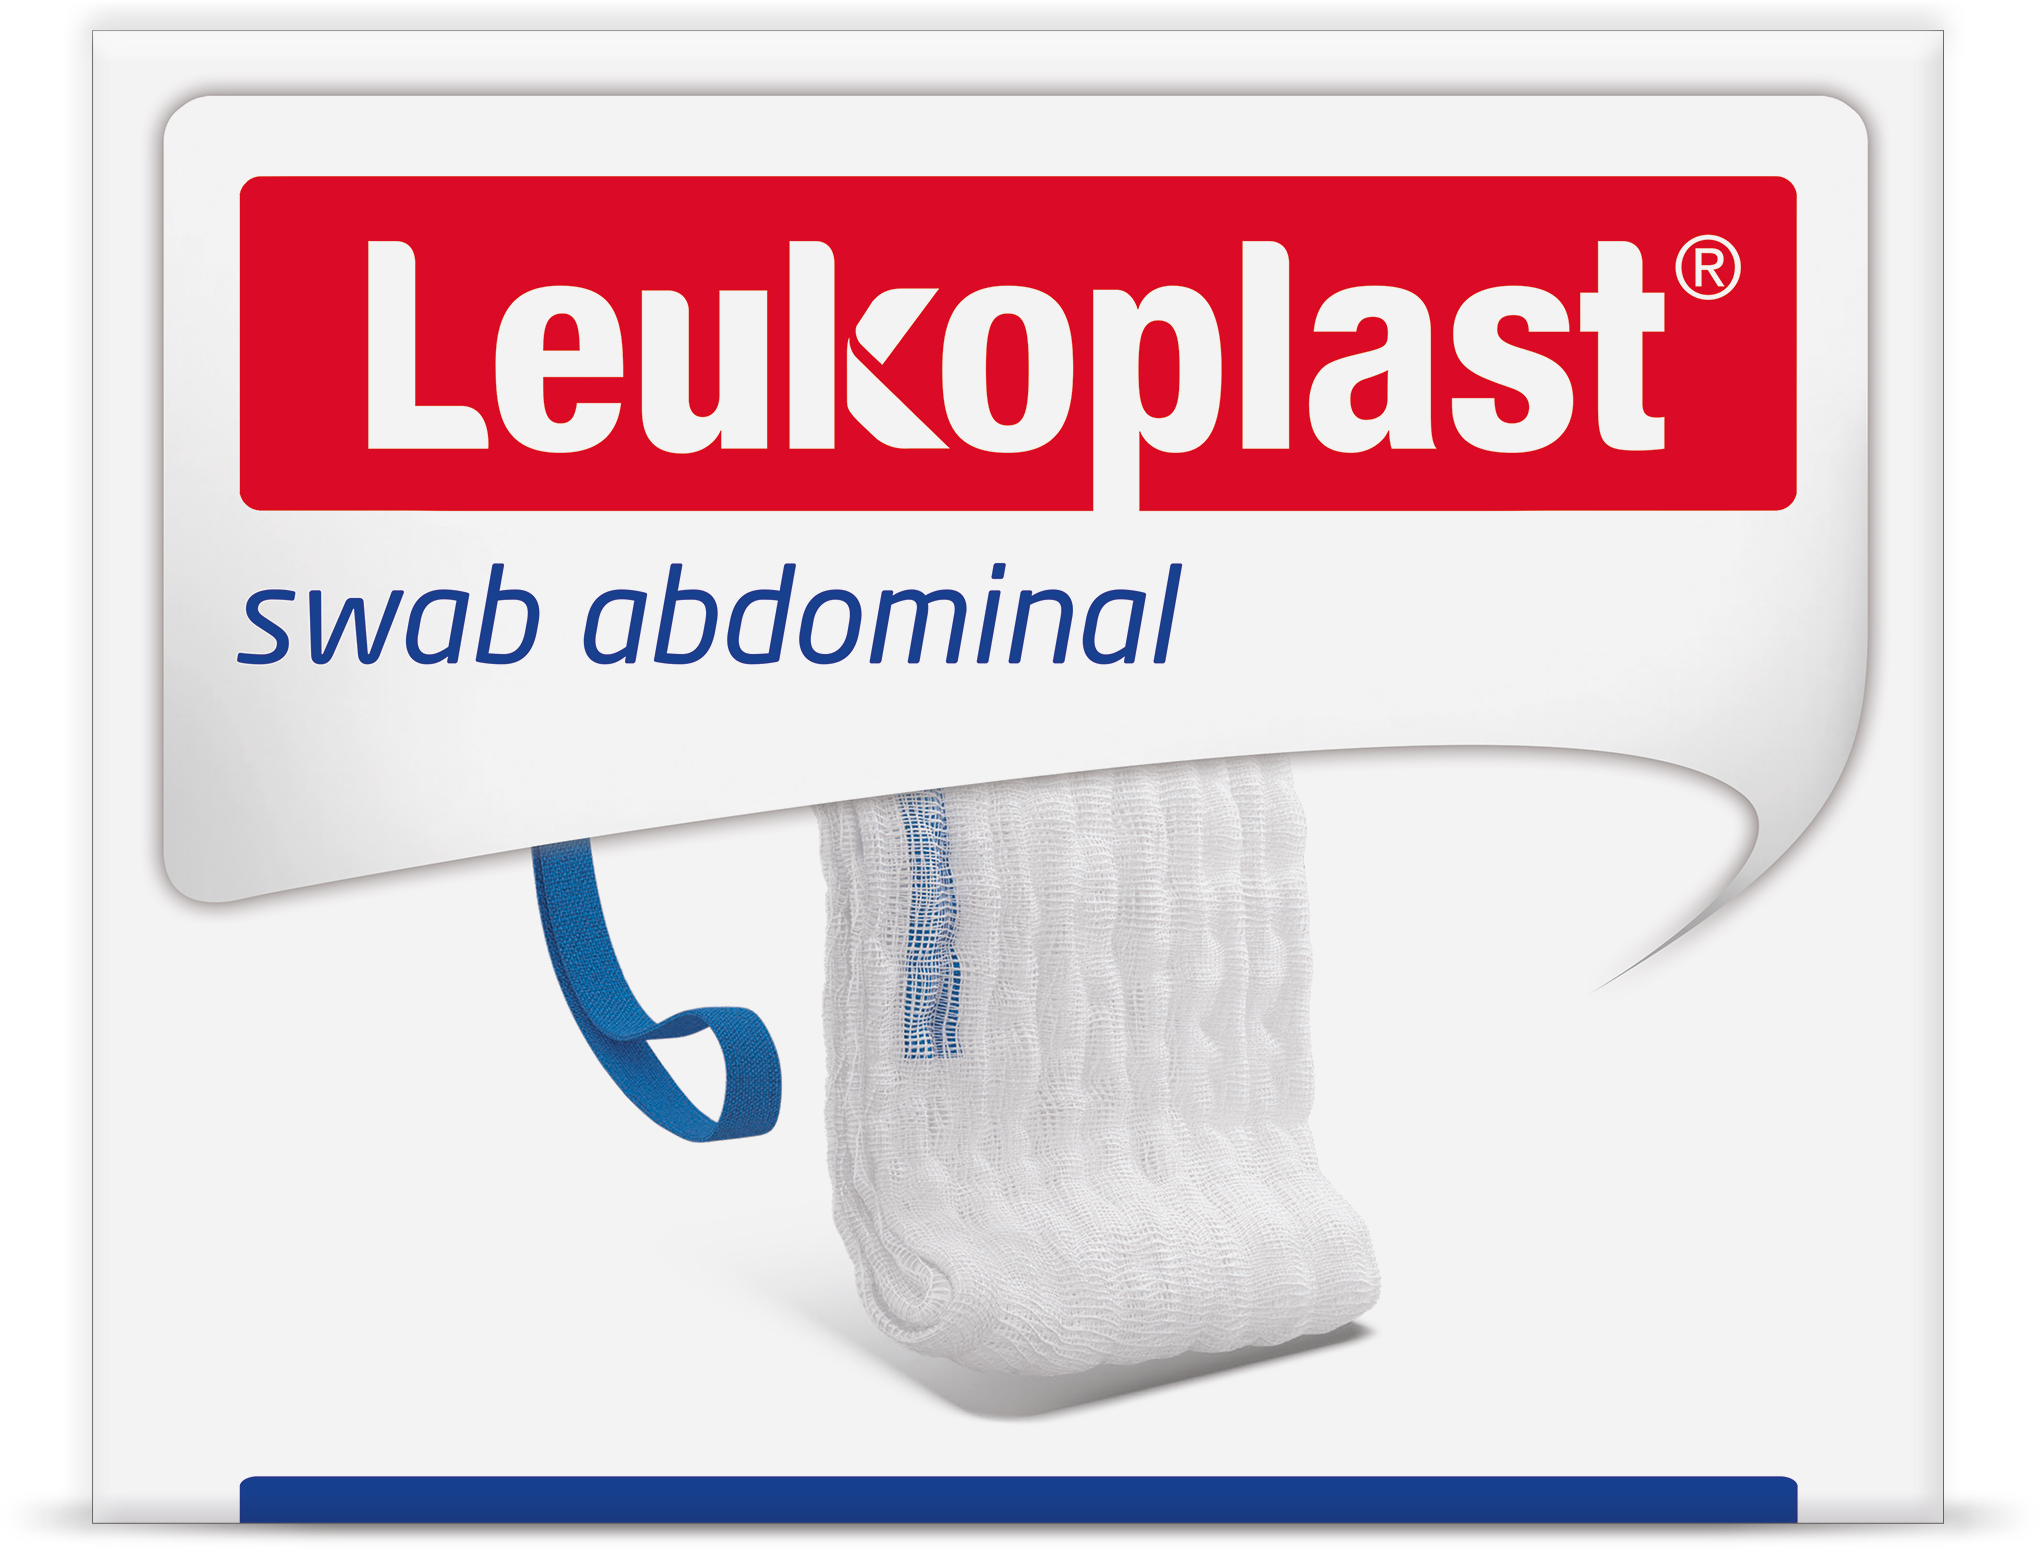 Leukoplast swab abdominal – absorbent 100% cotton gauze